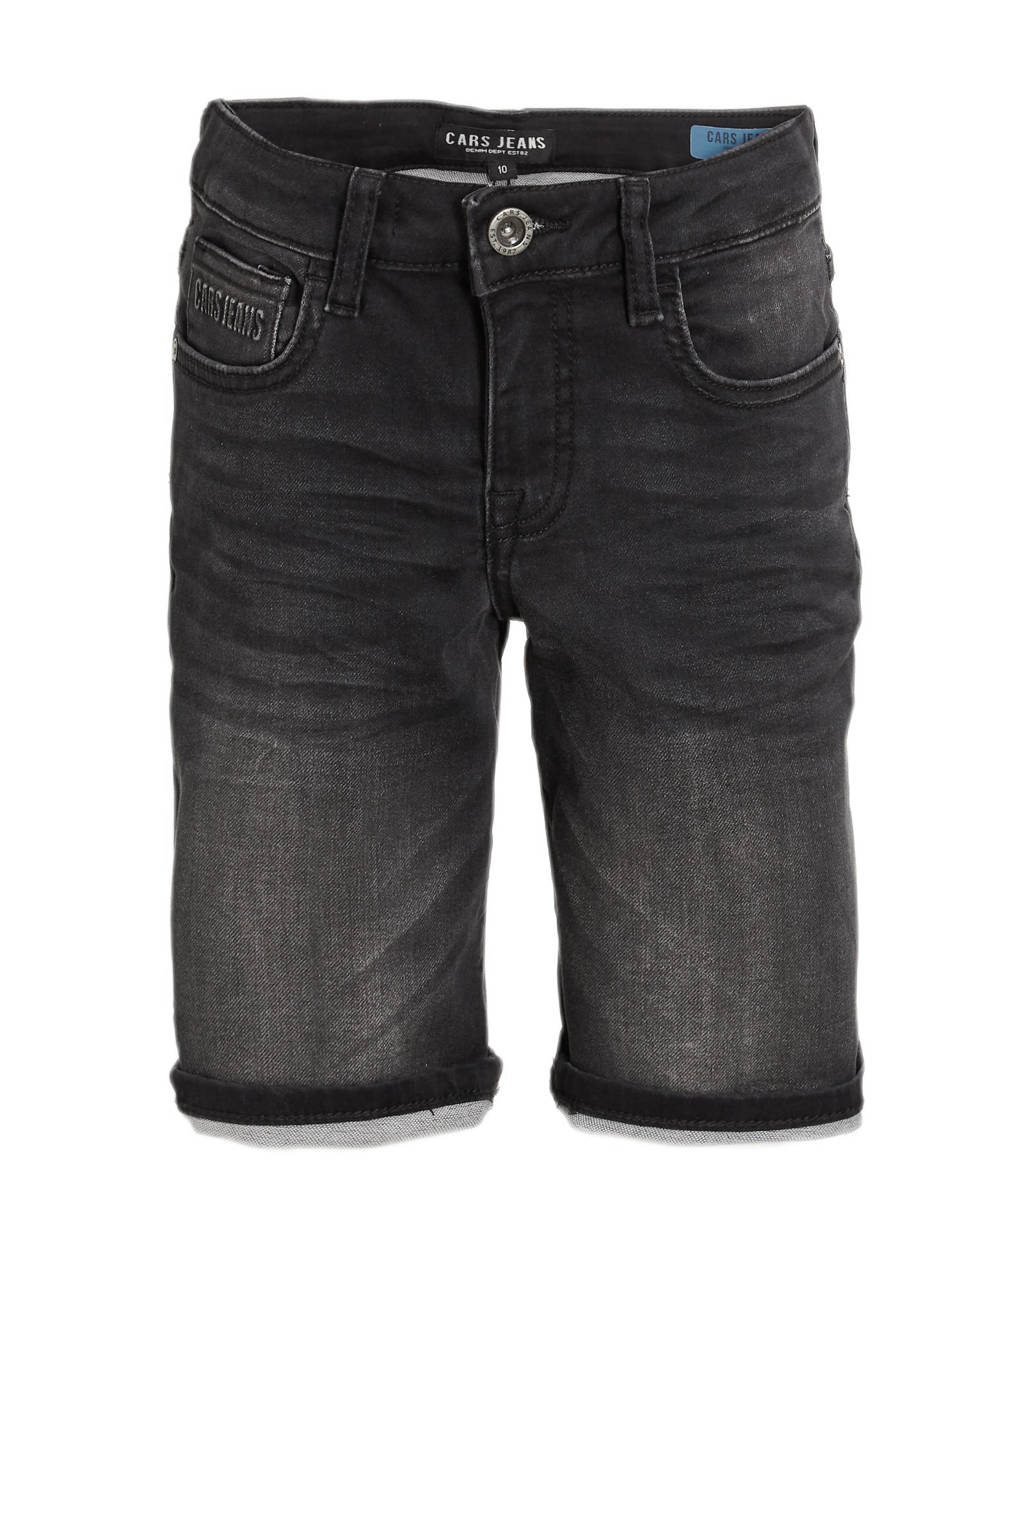 Cars jeans bermuda Seatle black used